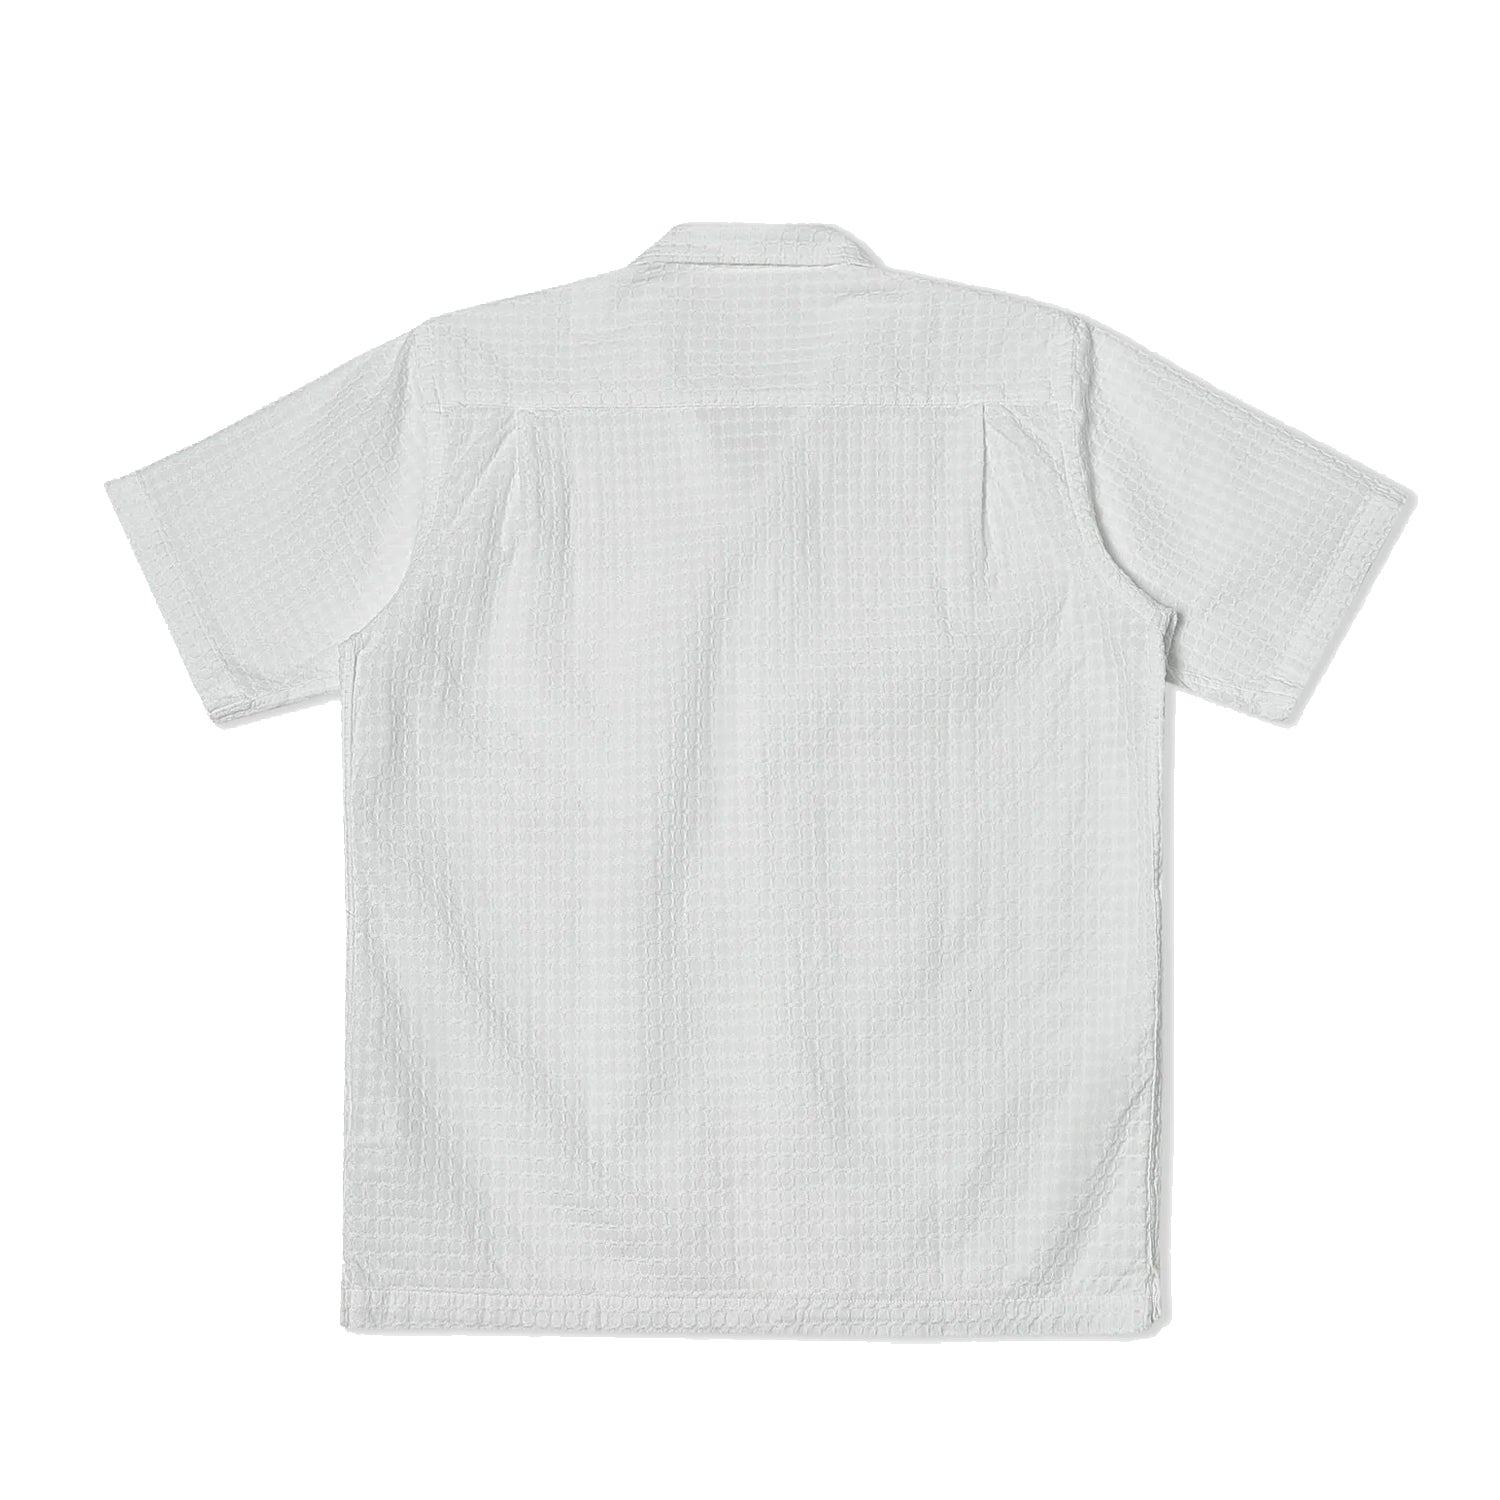 Camp Shirt - Delos Cotton